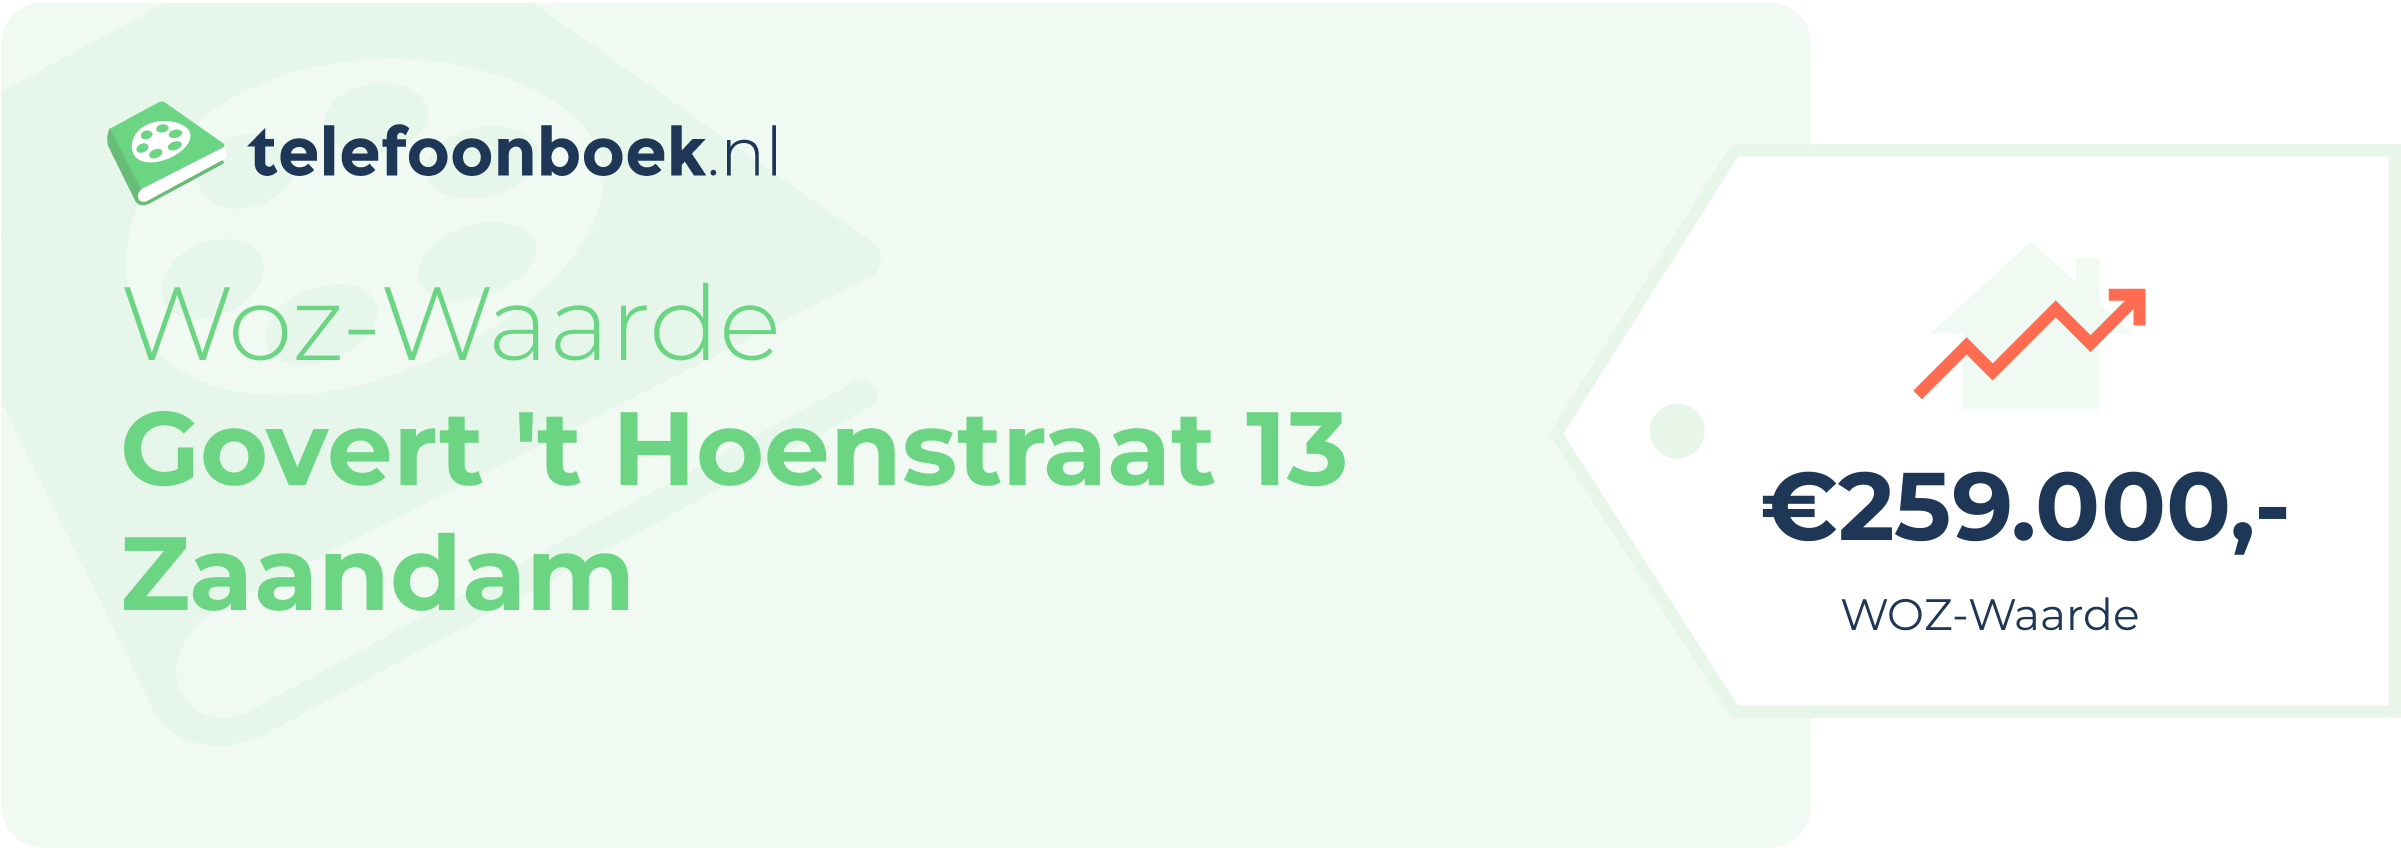 WOZ-waarde Govert 't Hoenstraat 13 Zaandam